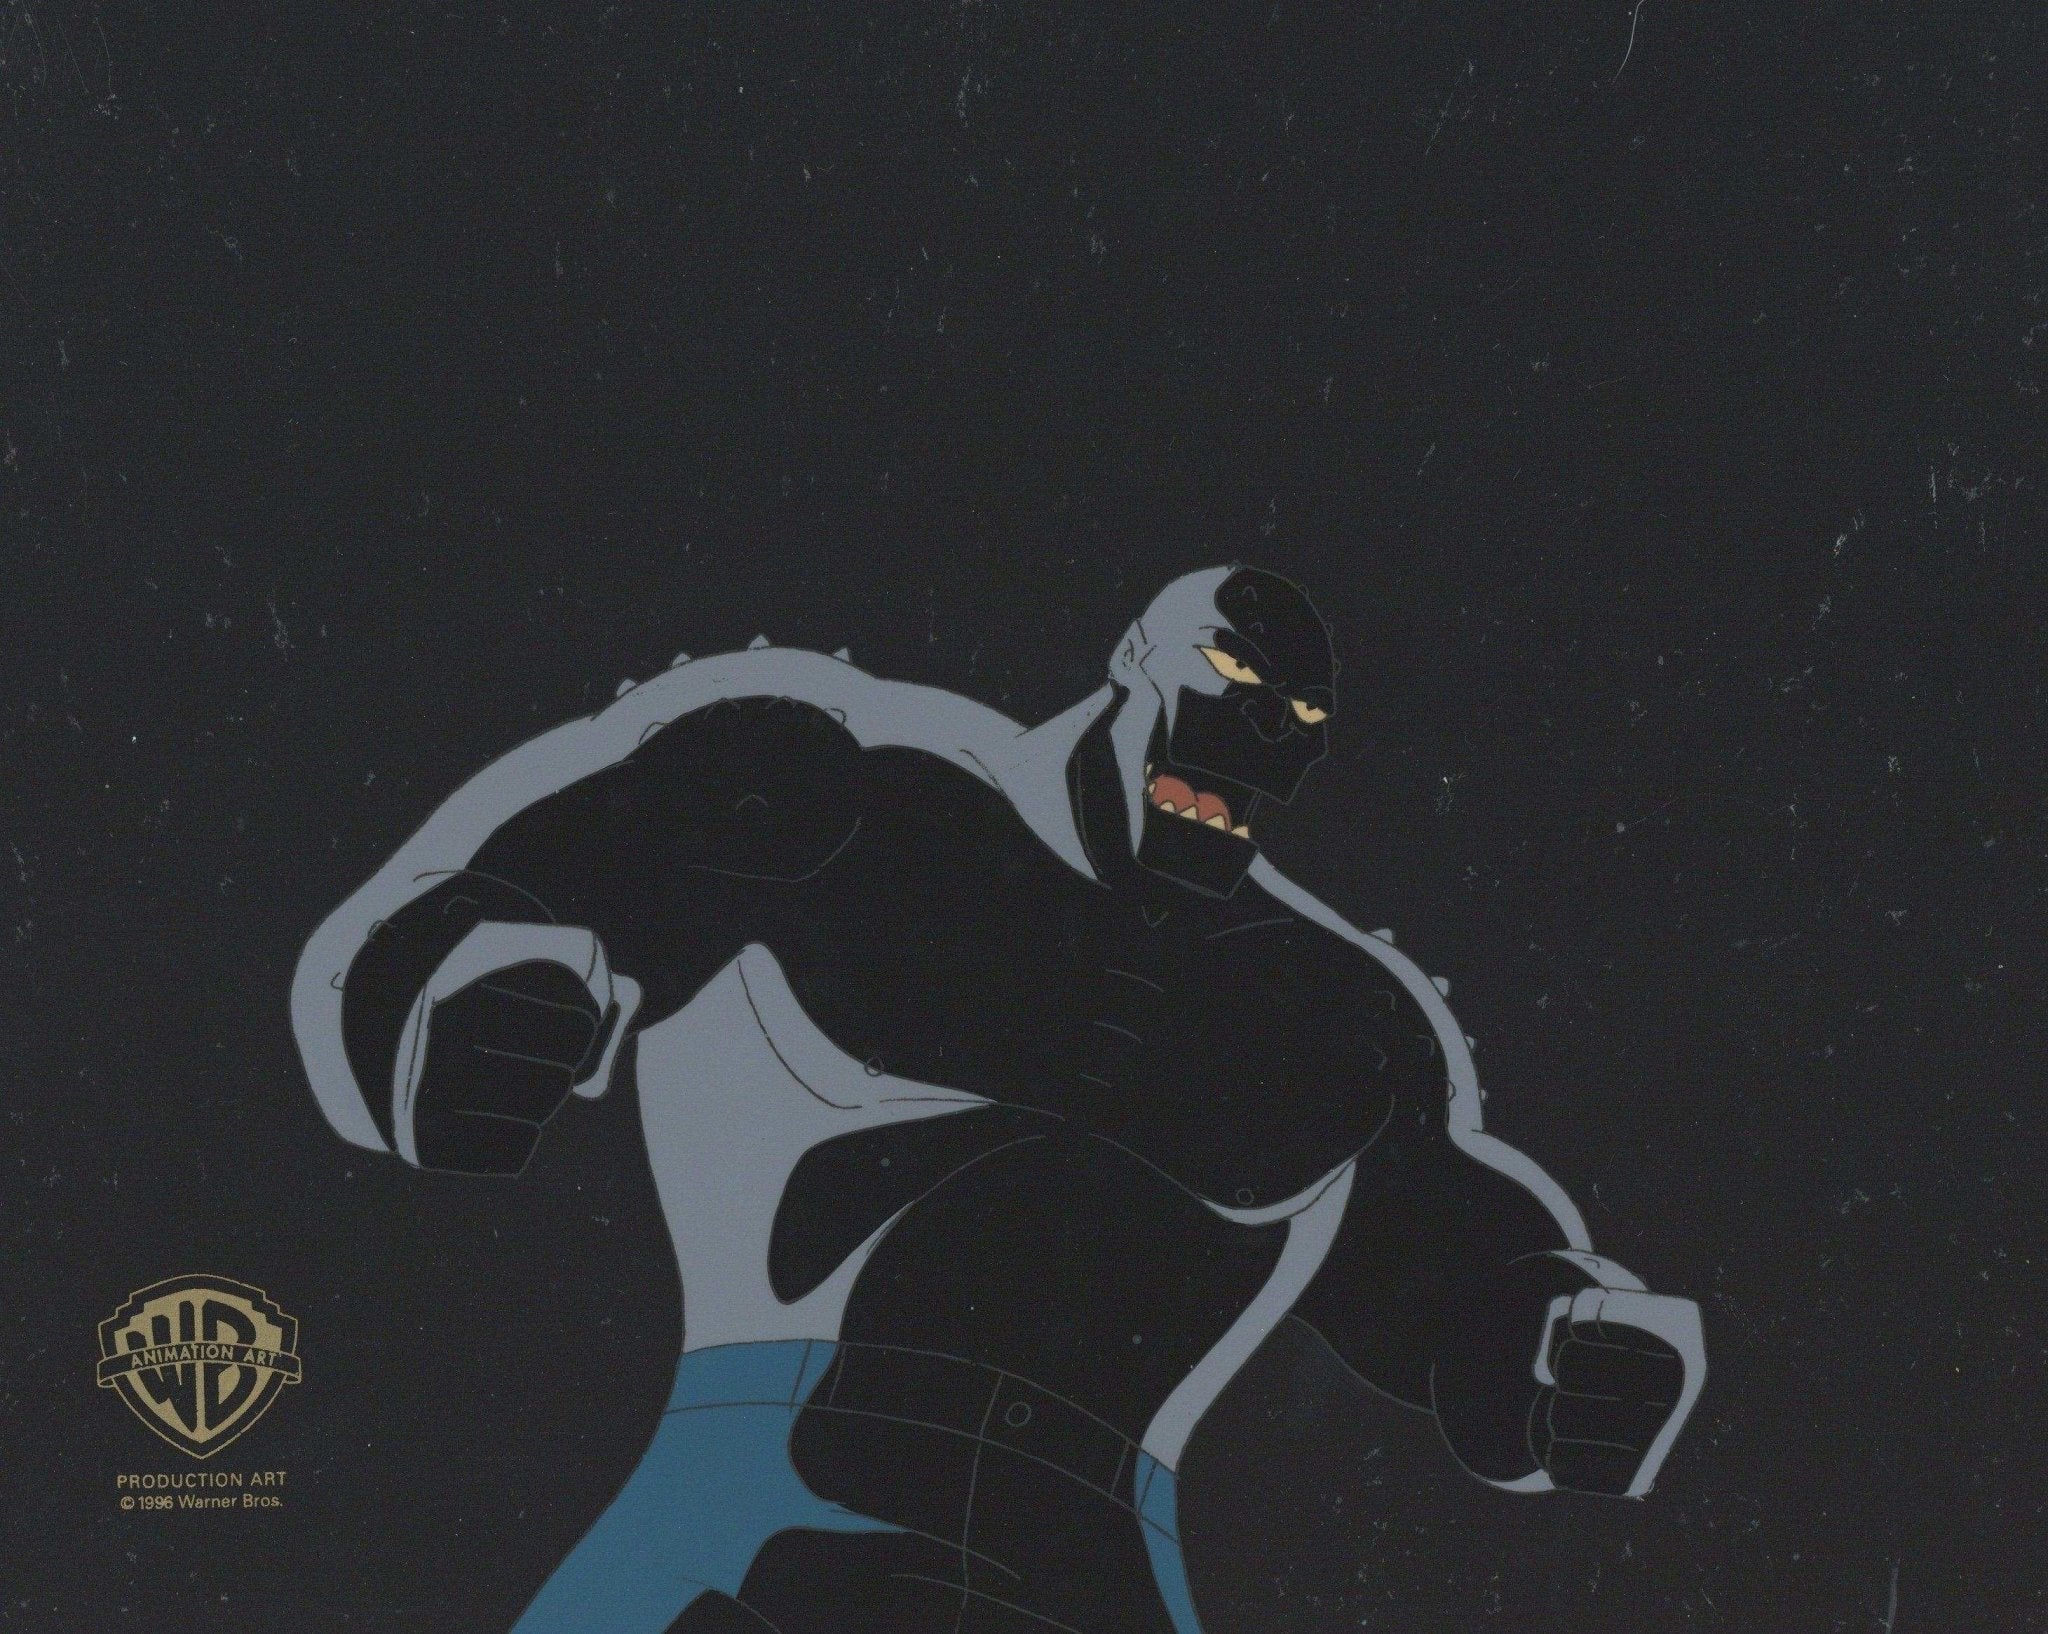 batman the animated series killer croc